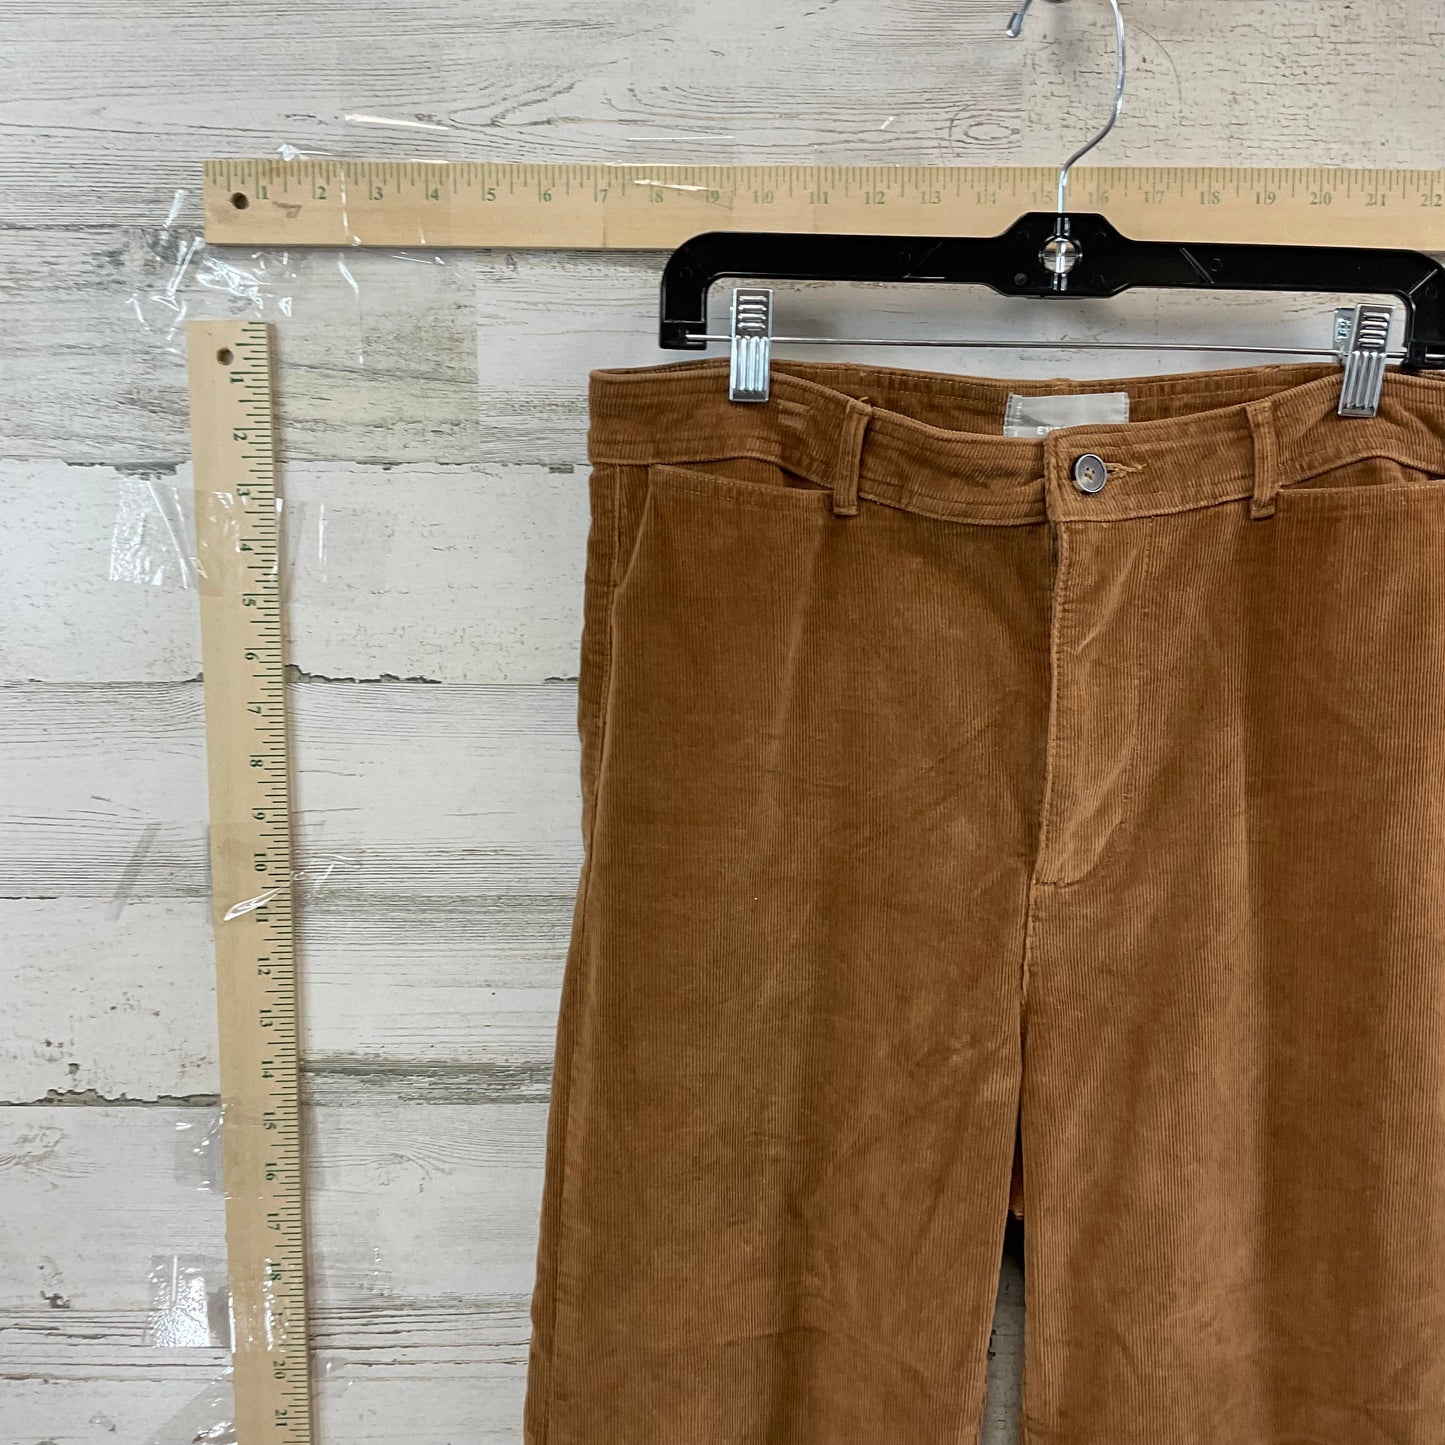 Pants Corduroy By Everlane  Size: 14